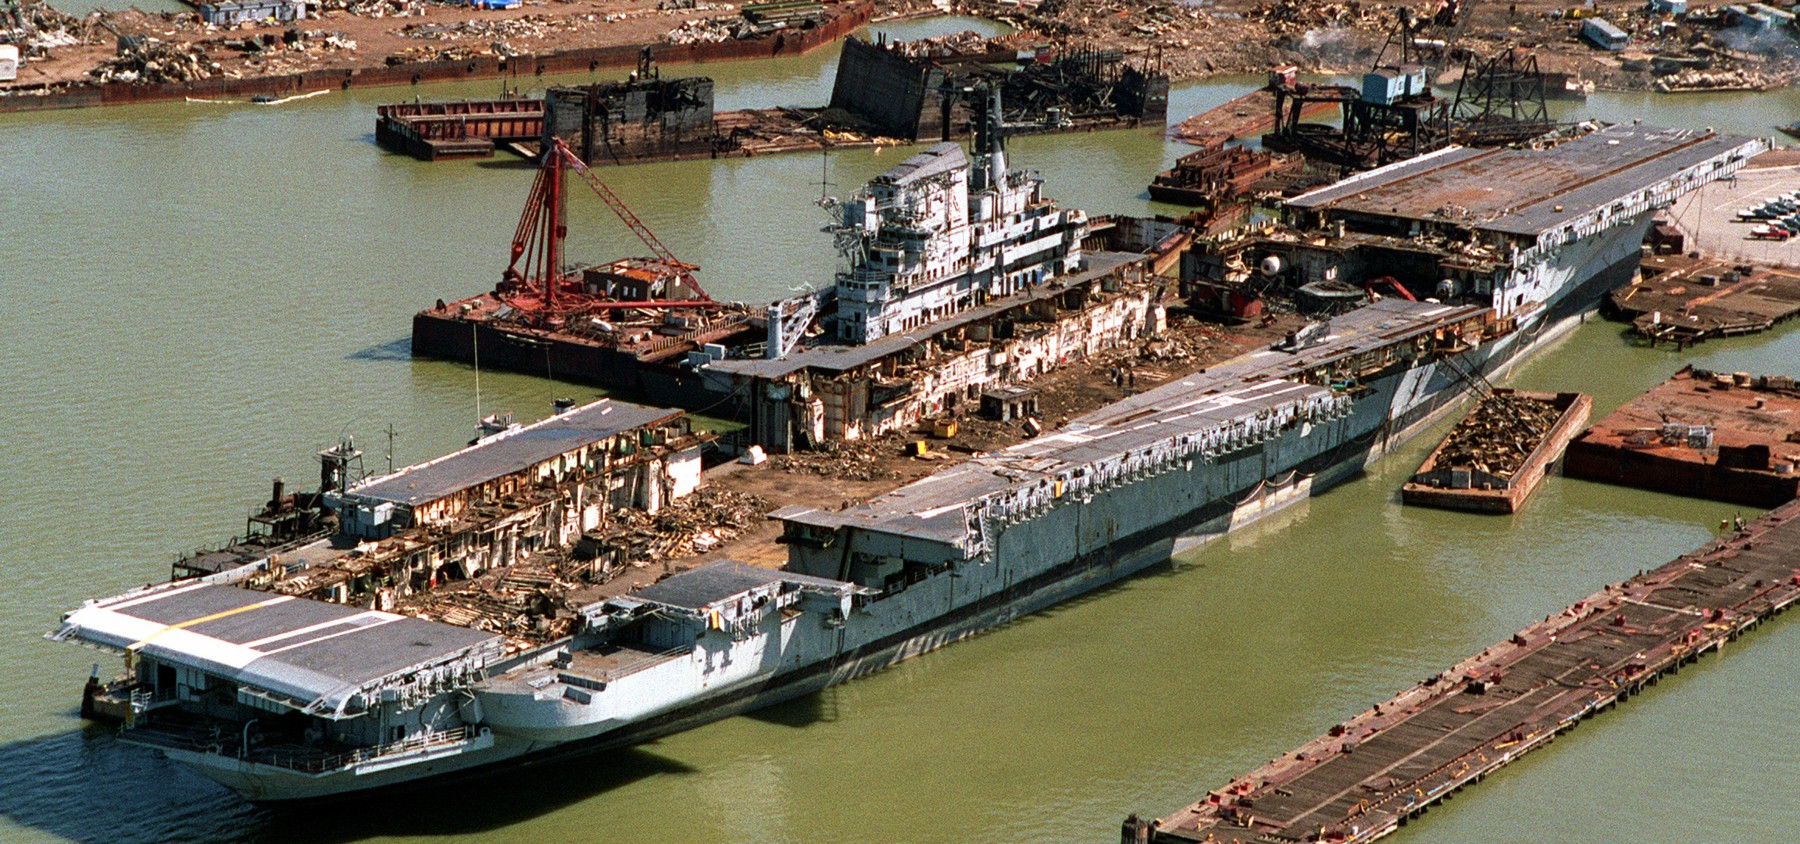 cv-60 uss saratoga forrestal class aircraft carrier us navy scrapping brownsville texas 06